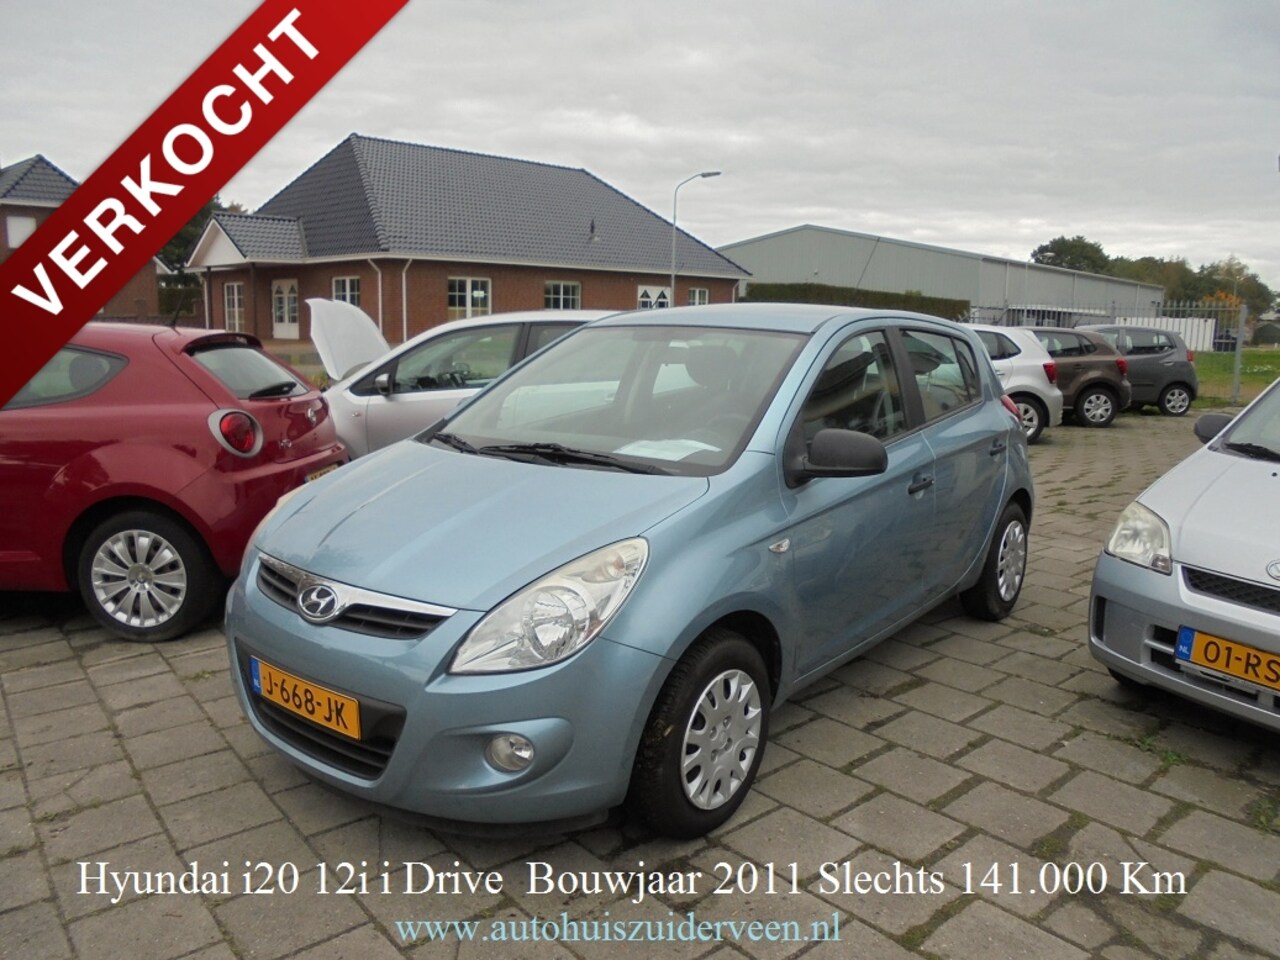 Hyundai i20 - 12i i-Drive 2011 Nw Apk Inruil Mogelijk !!! - AutoWereld.nl